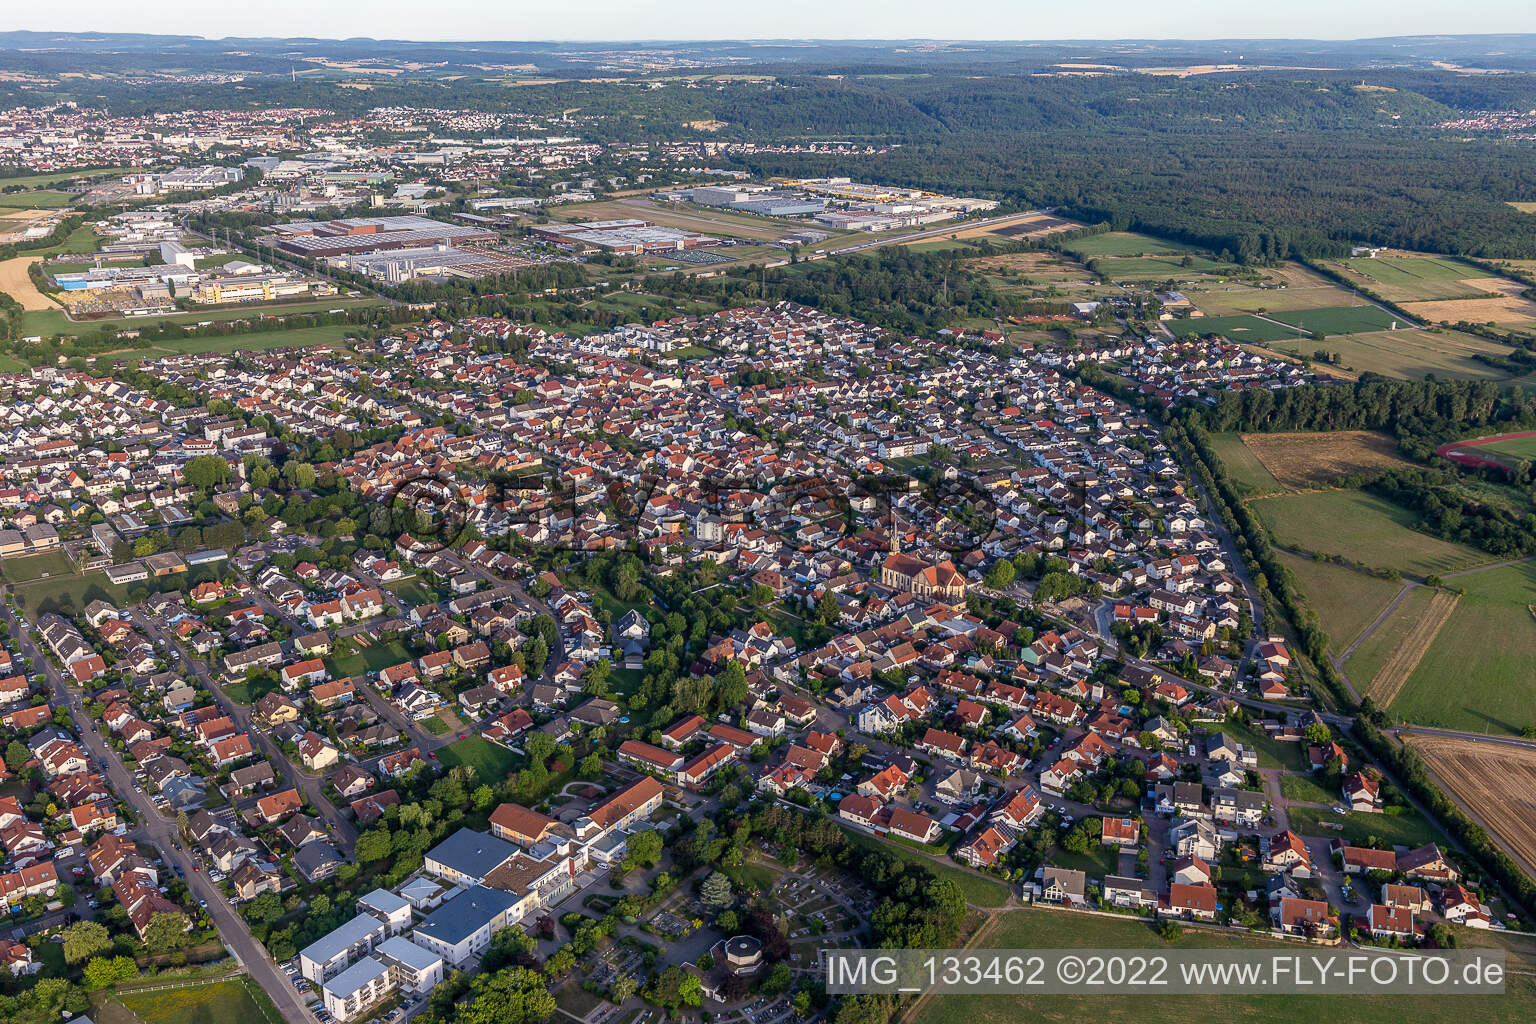 Oblique view of District Karlsdorf in Karlsdorf-Neuthard in the state Baden-Wuerttemberg, Germany